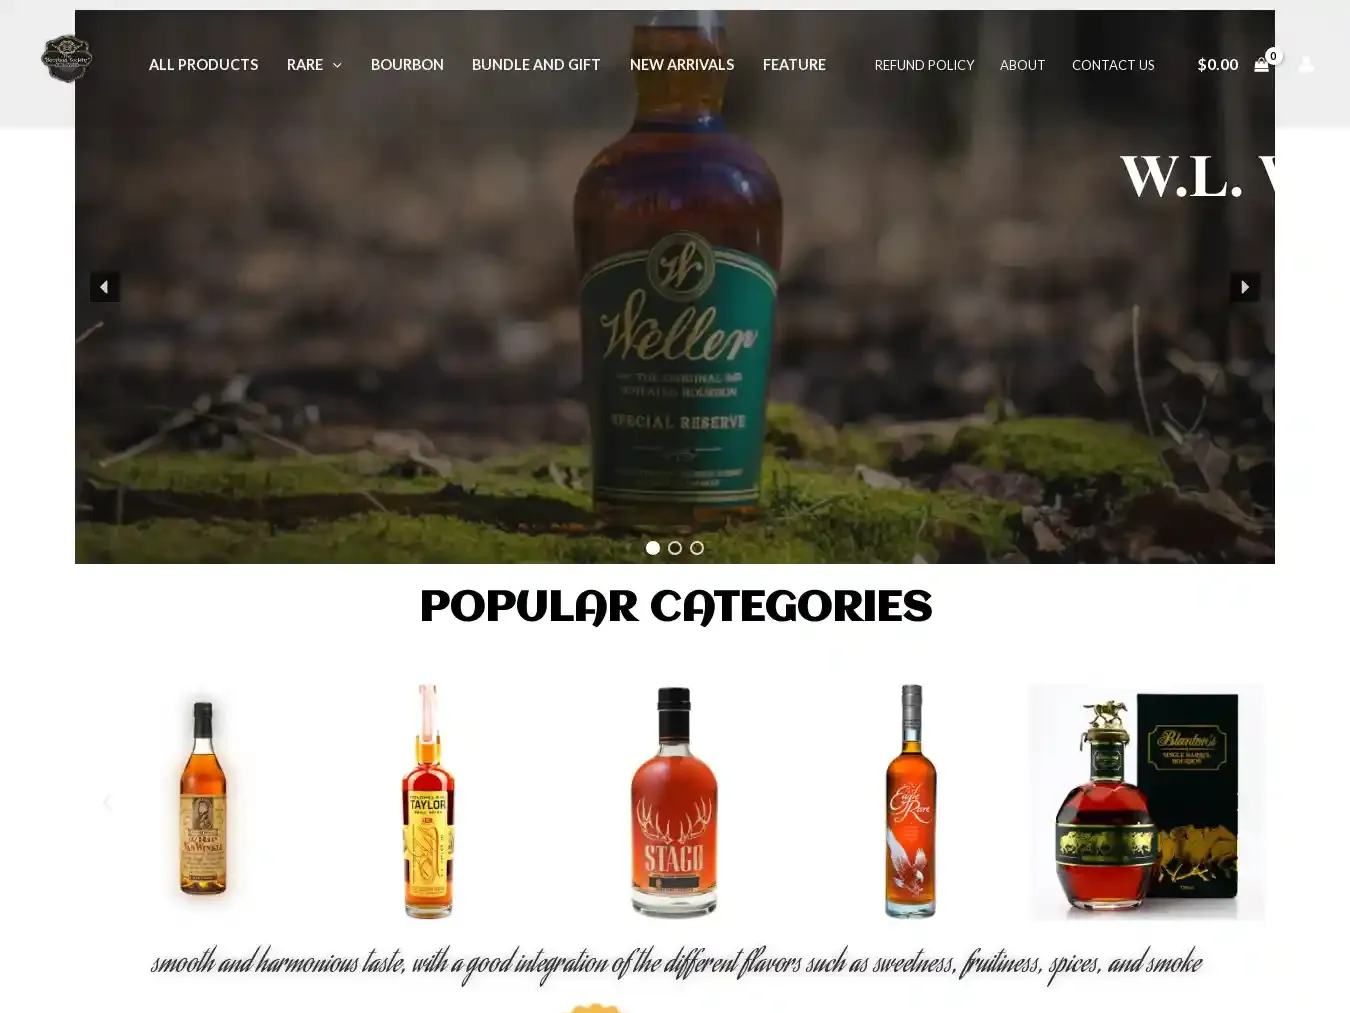 Thebourbonwhiskeysociety.com Fraudulent Whisky website.